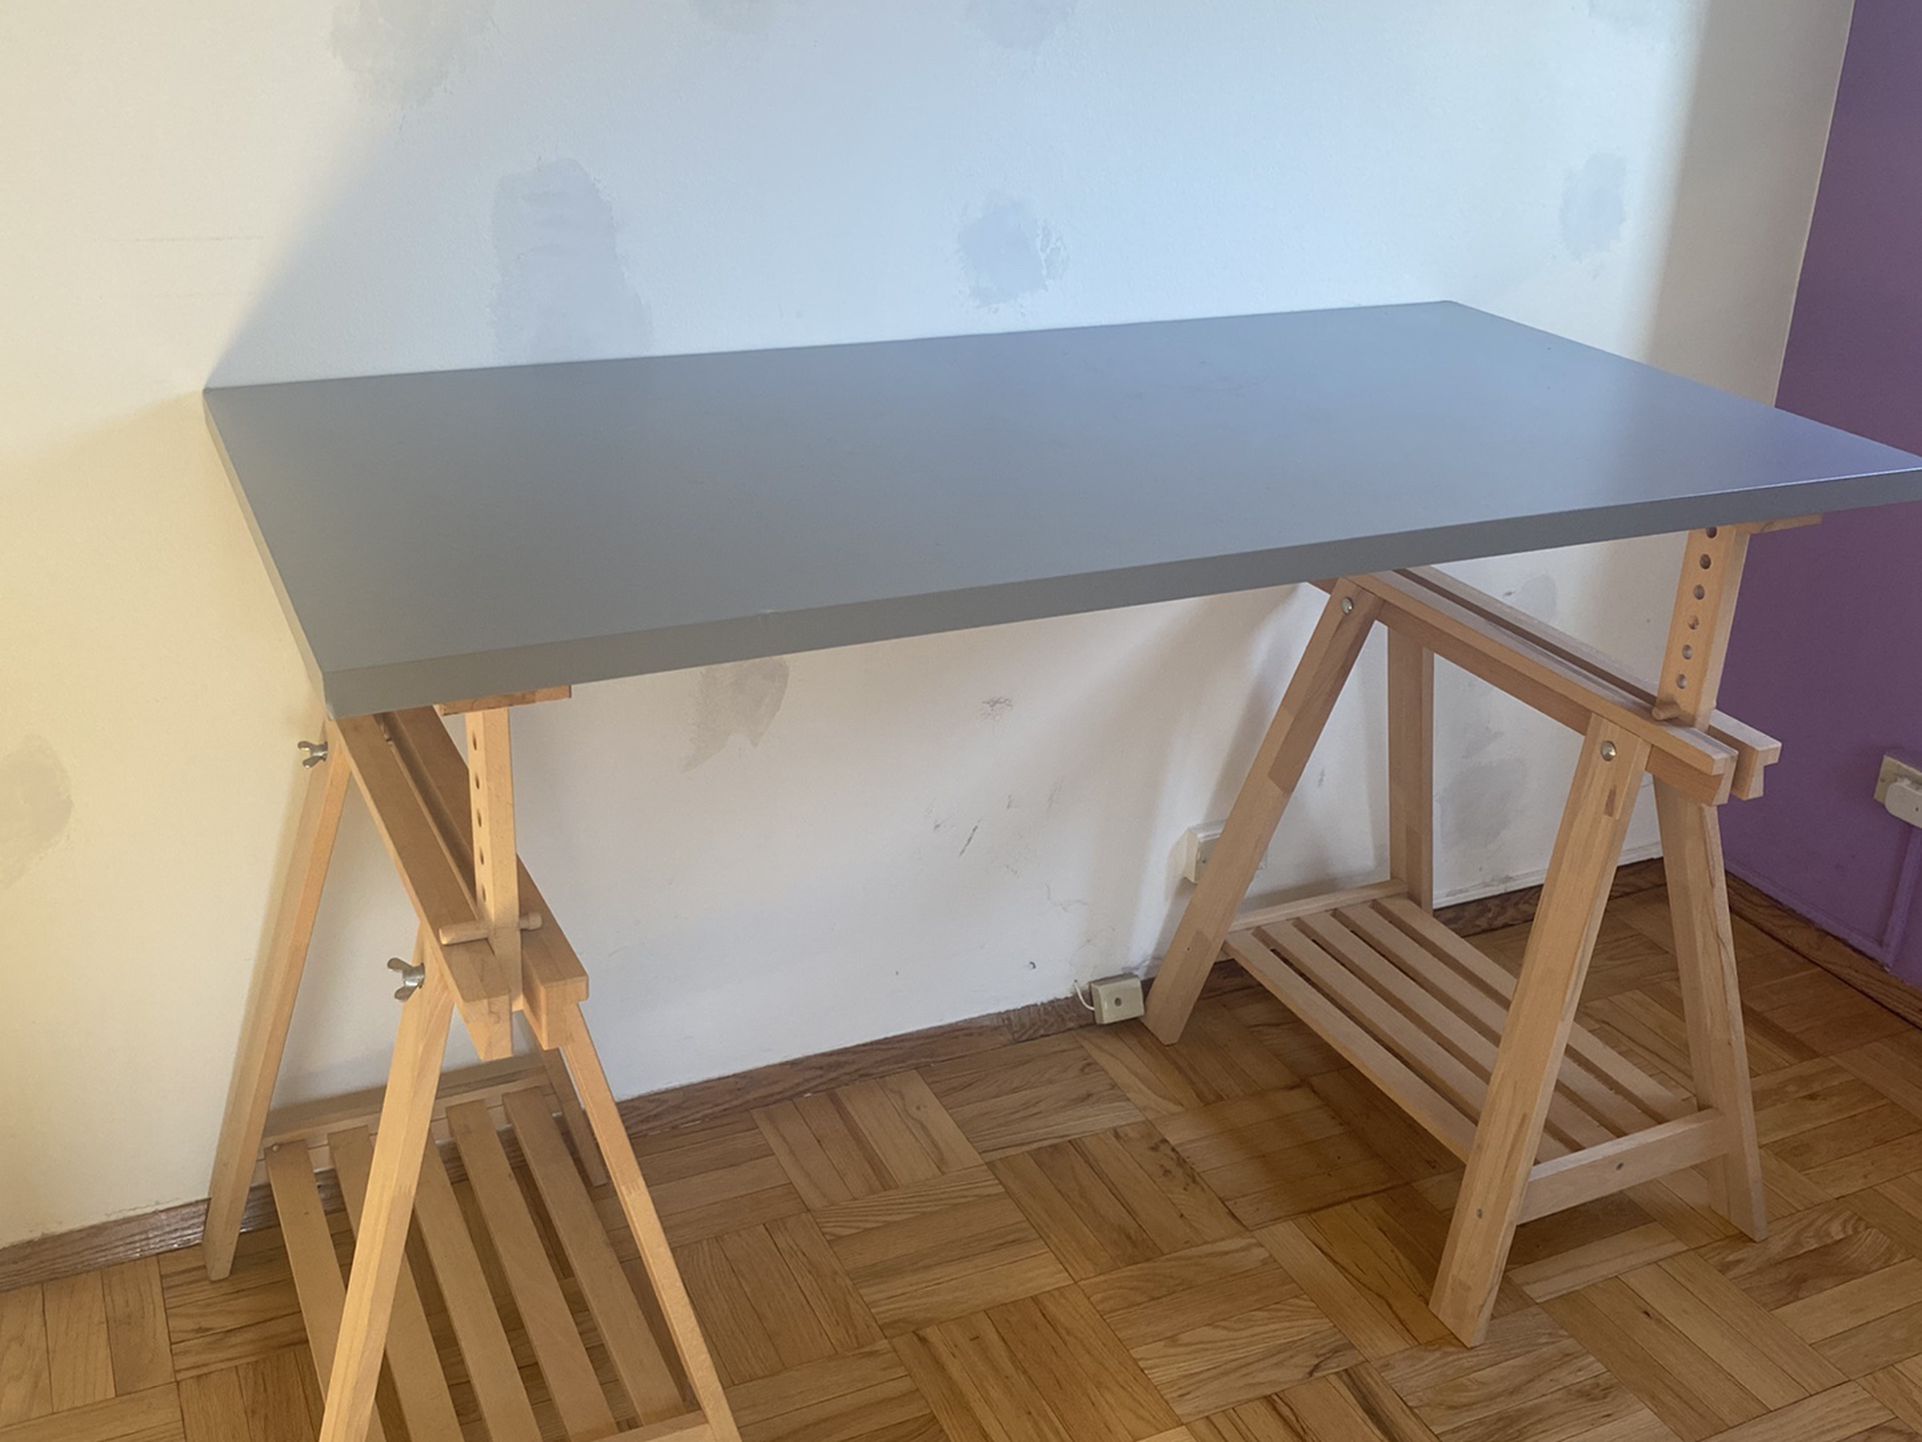 IKEA Drafting Table